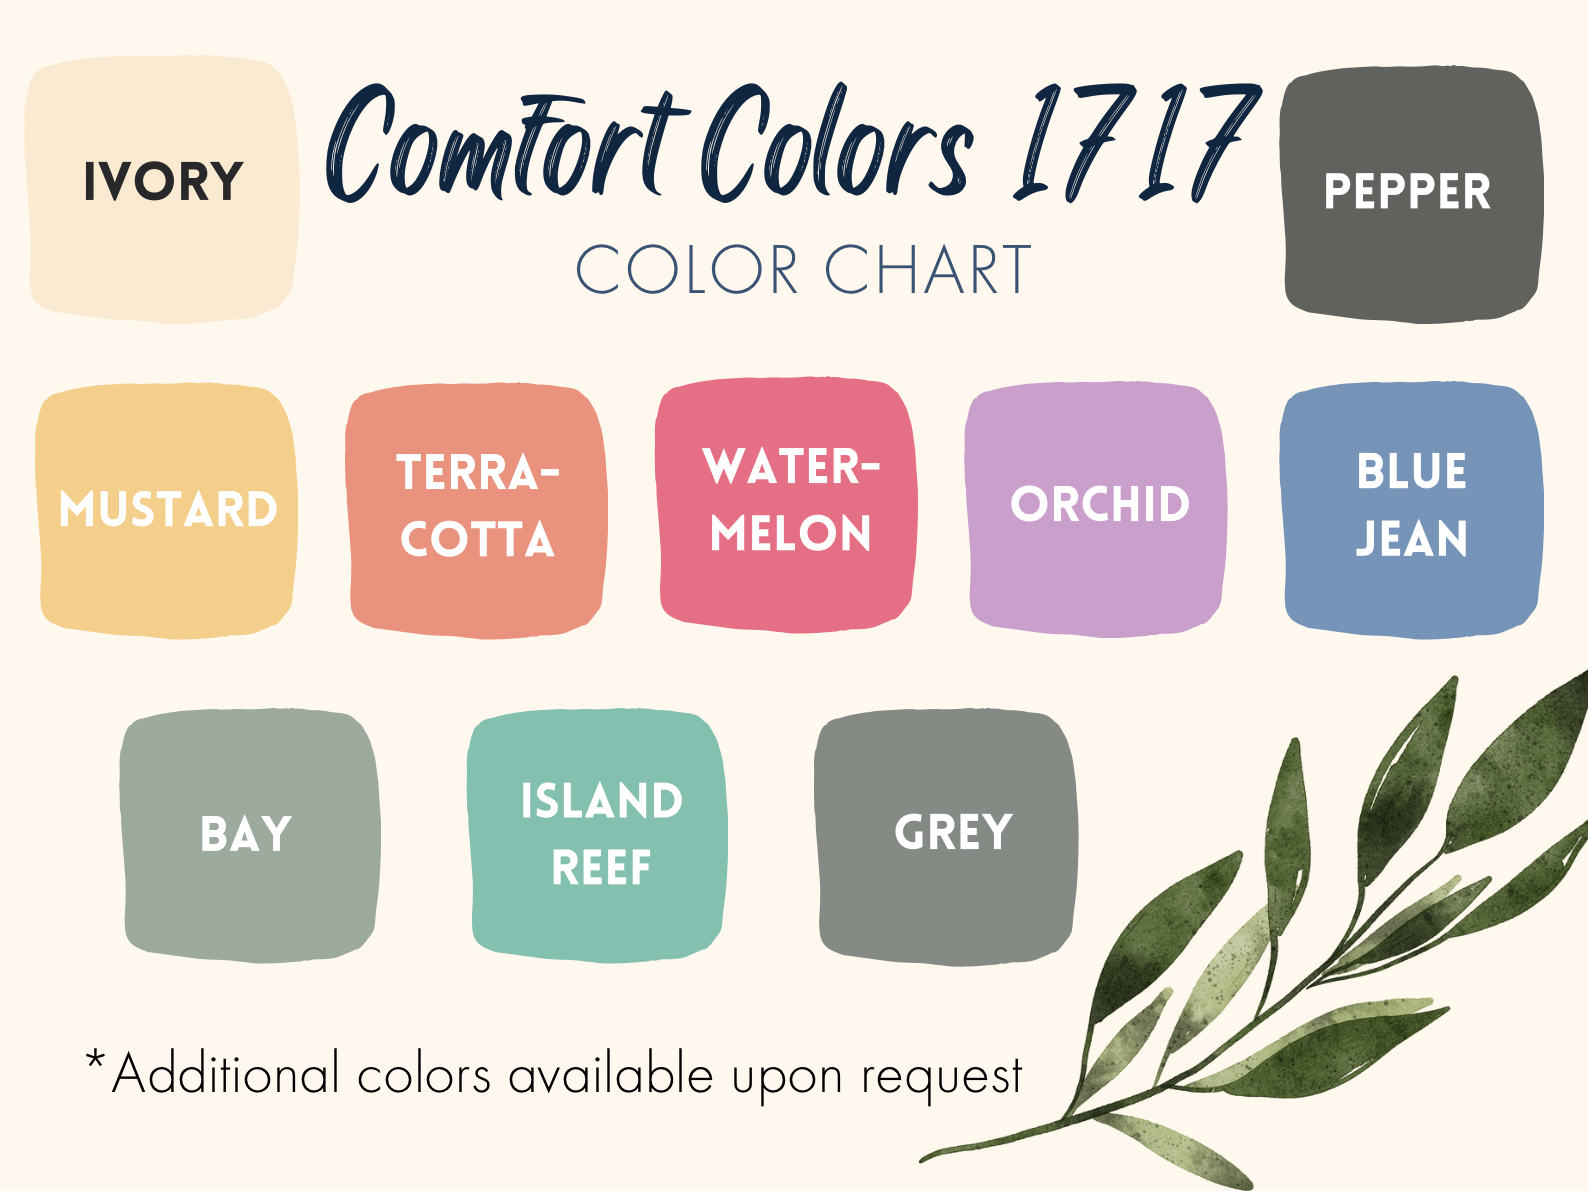 Comfort colors 1717 color chart